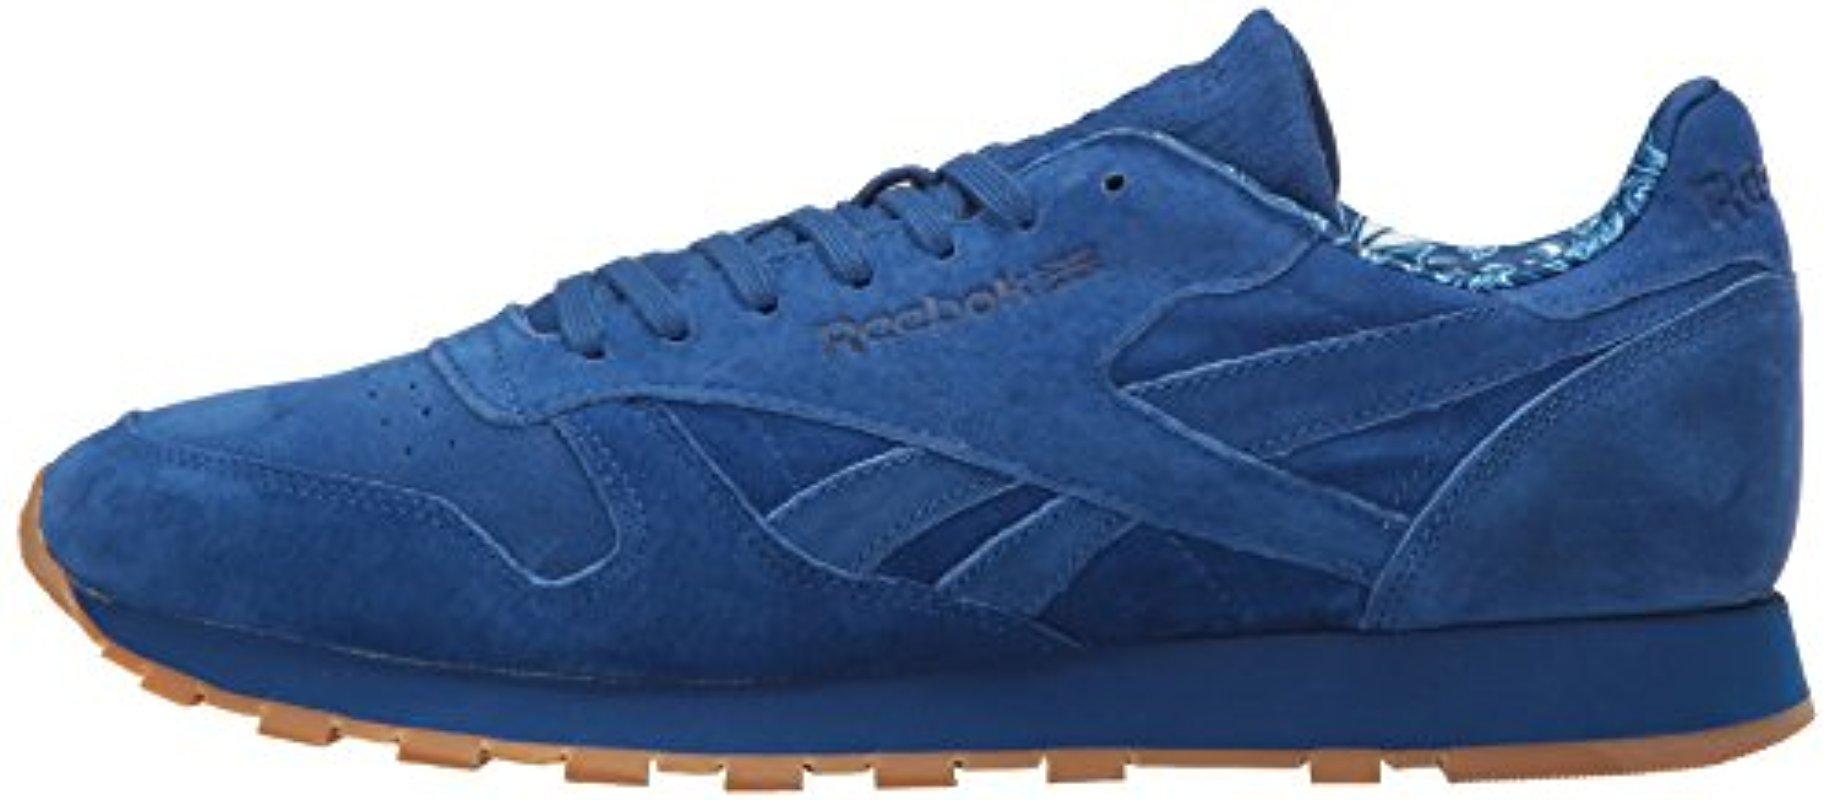 Reebok Classic Leather Tdc Fashion Sneaker in Blue for Men - Lyst